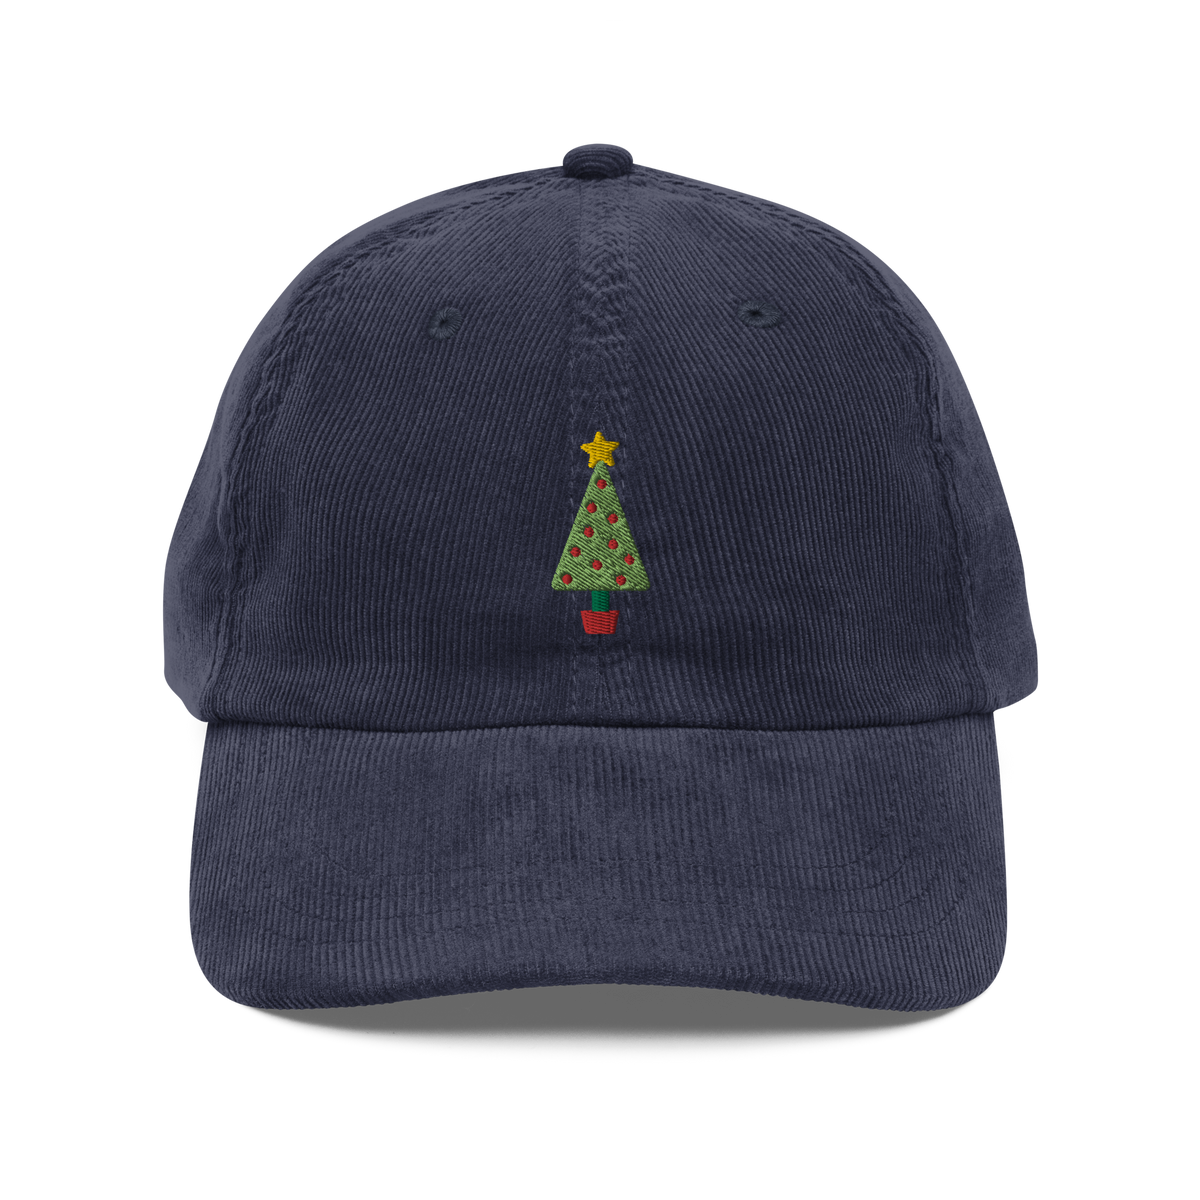 Christmas Tree Corduroy Hat